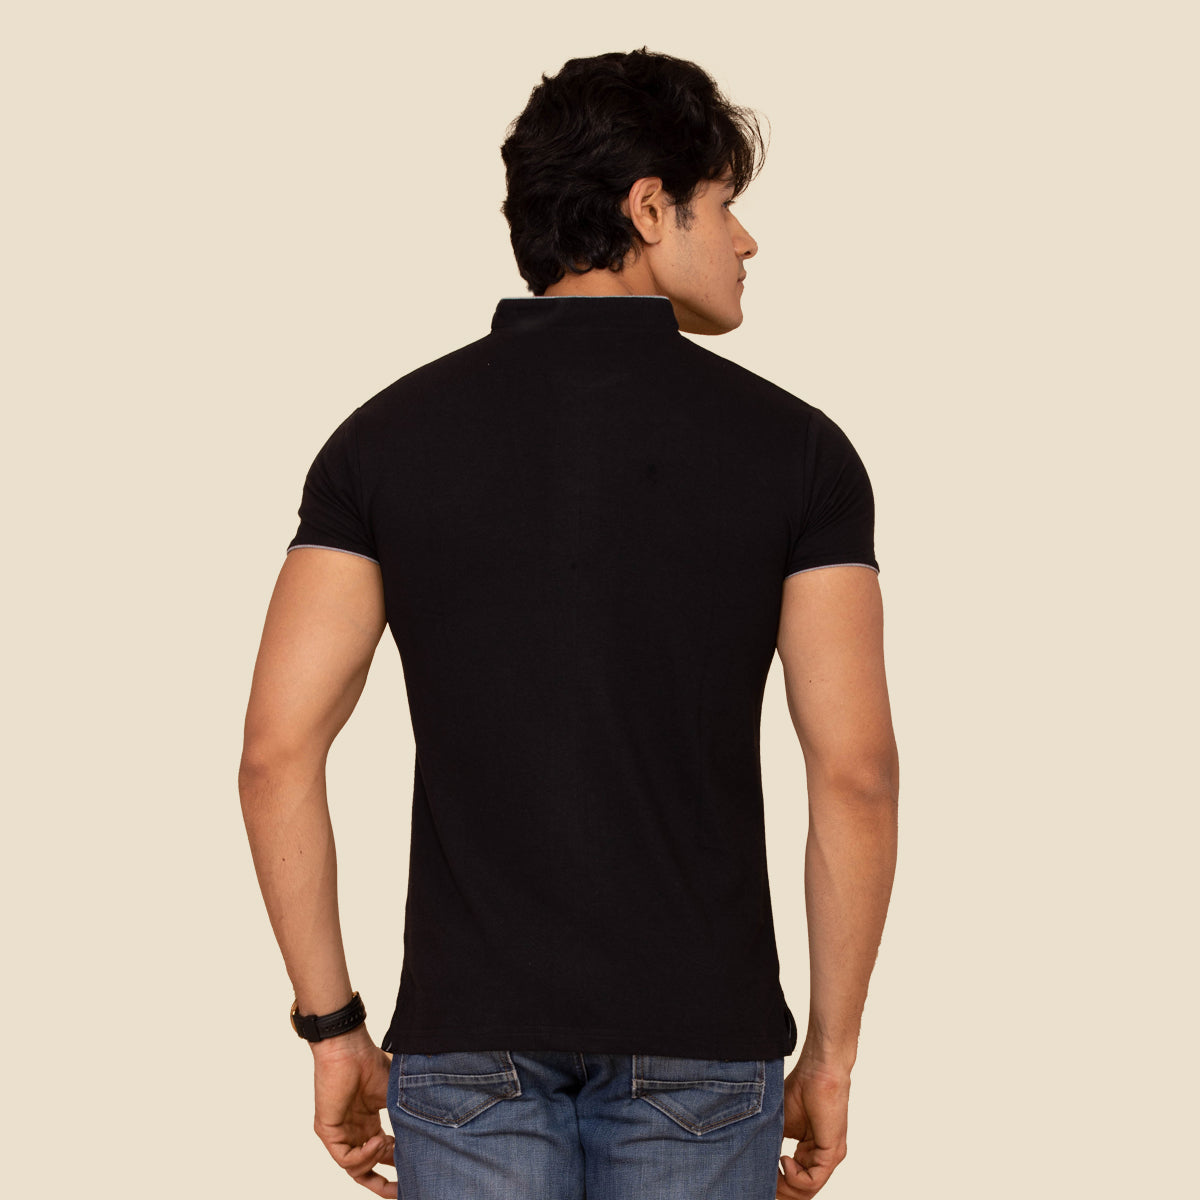 Prizmwear Pāla™️ Black Tshirt